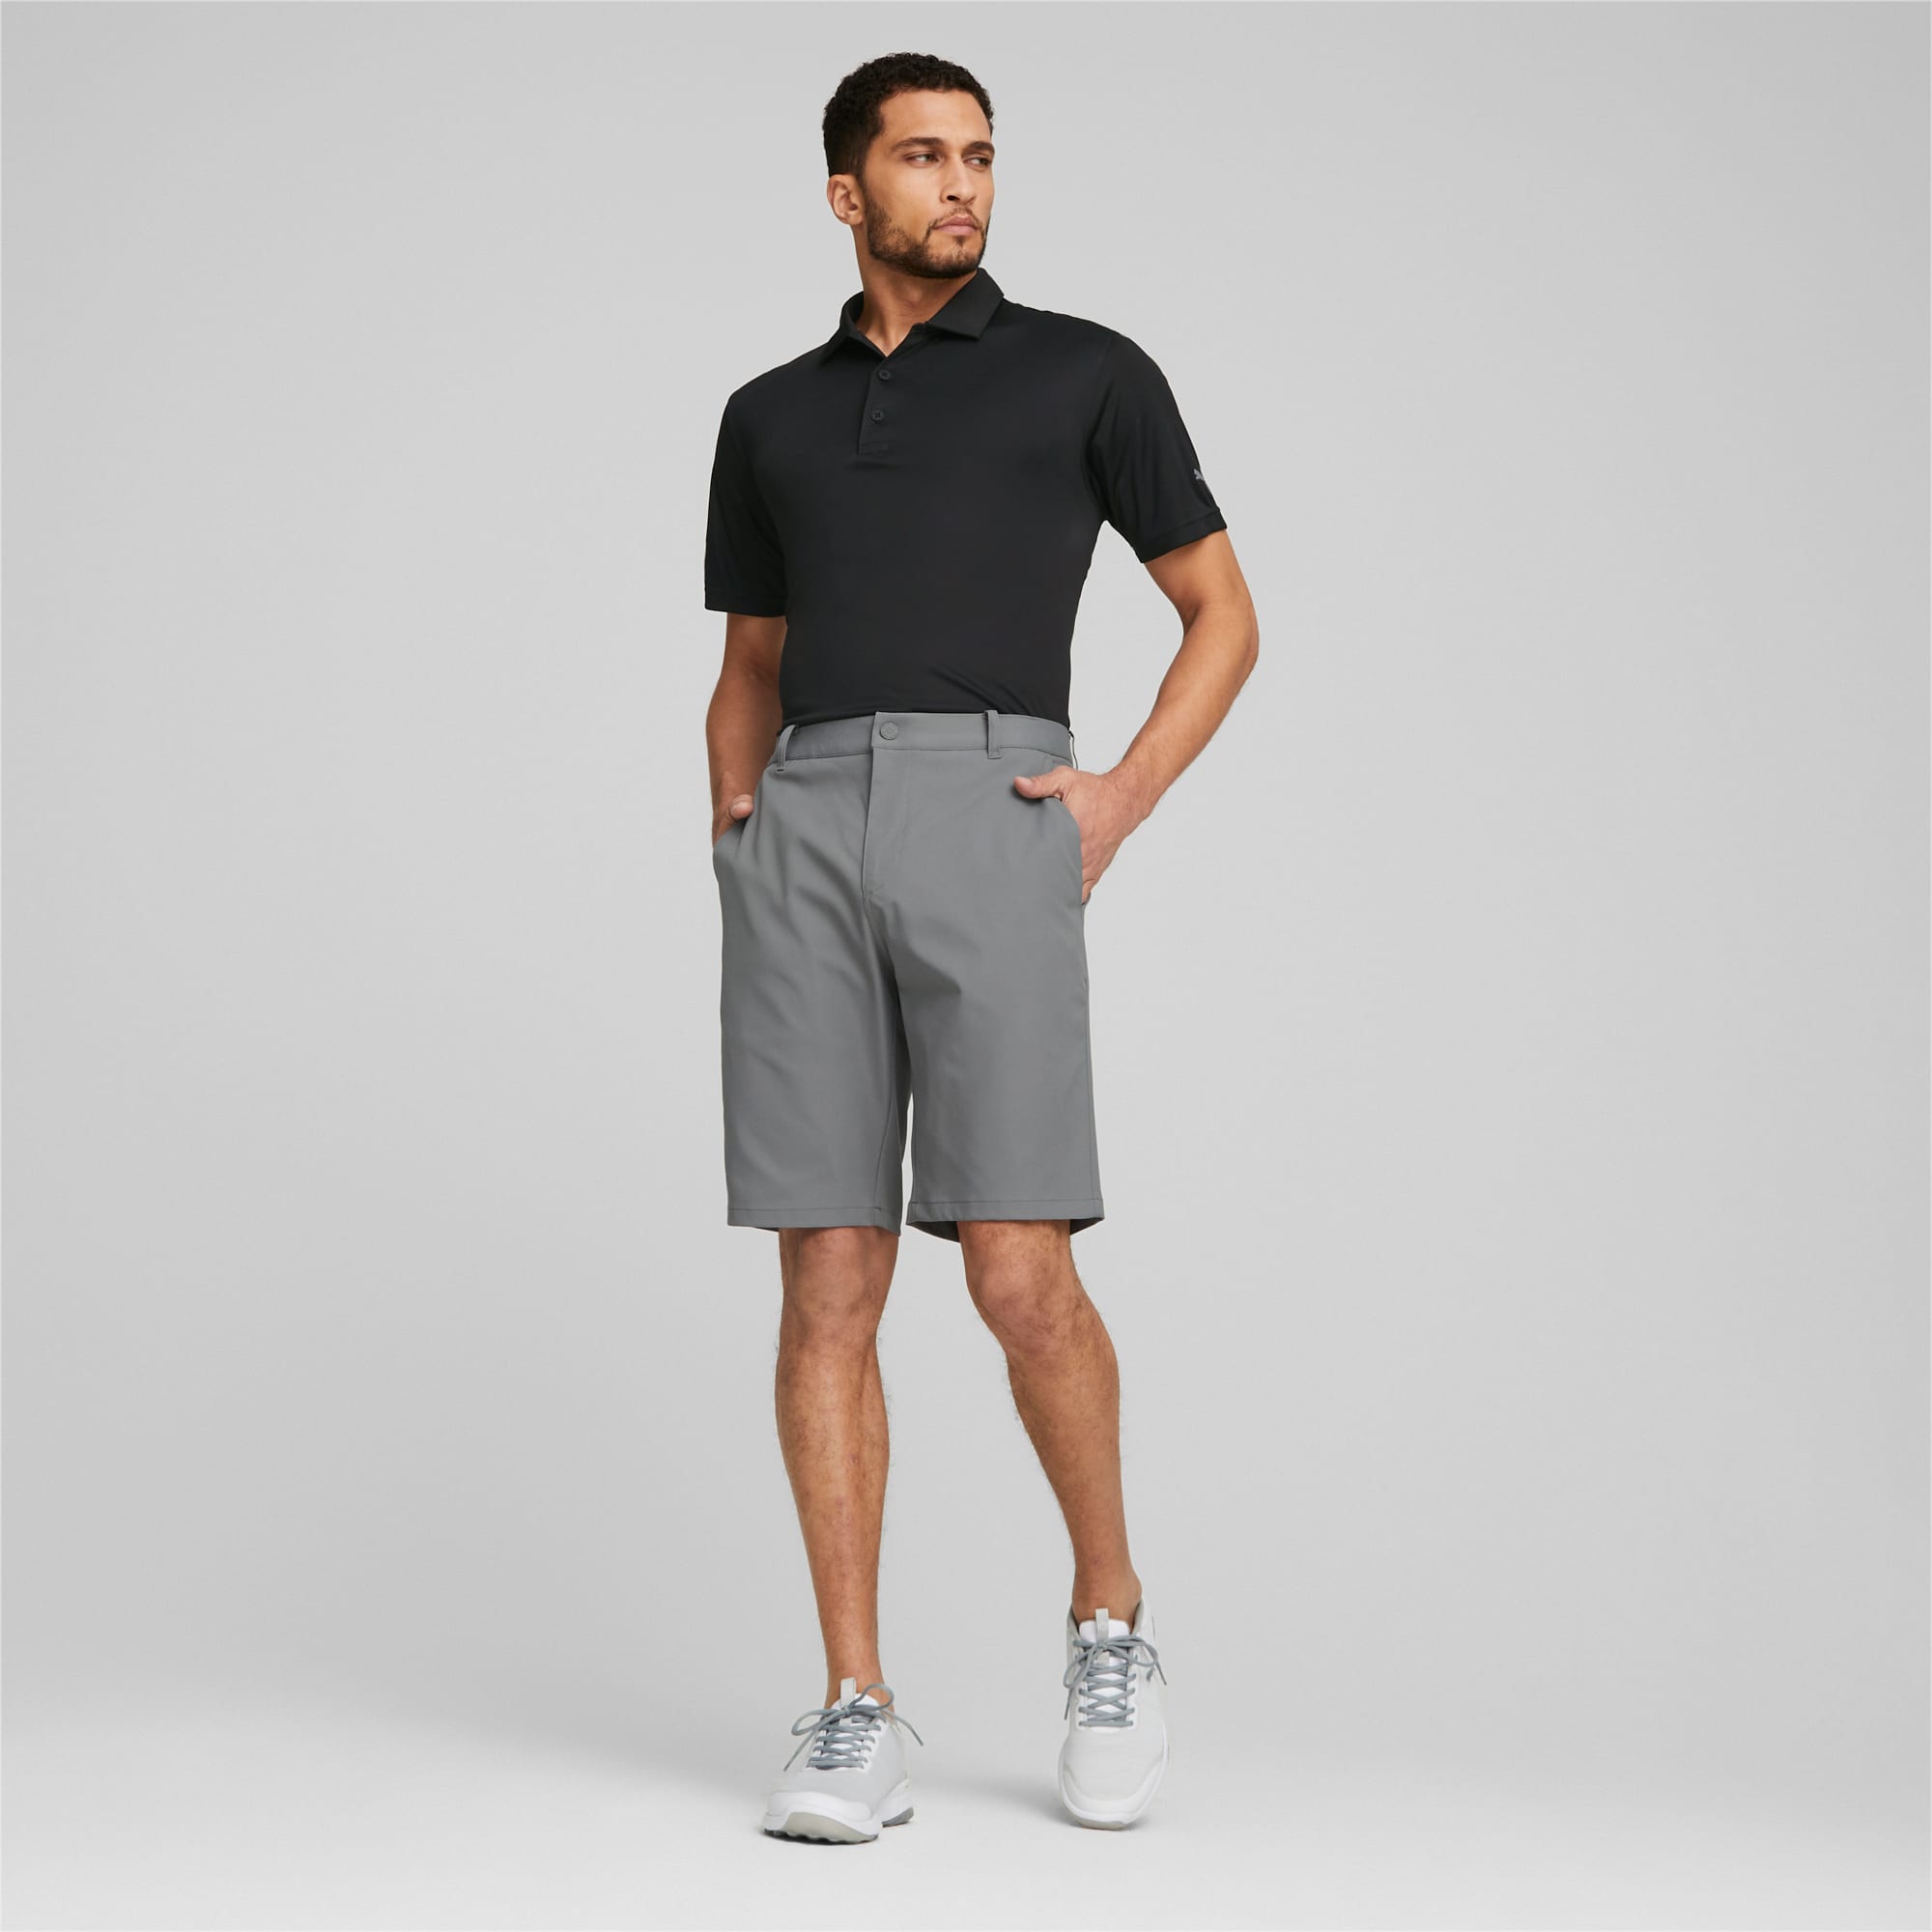 PUMA Shorts De Golf Dealer 10 Para Hombre, Gris